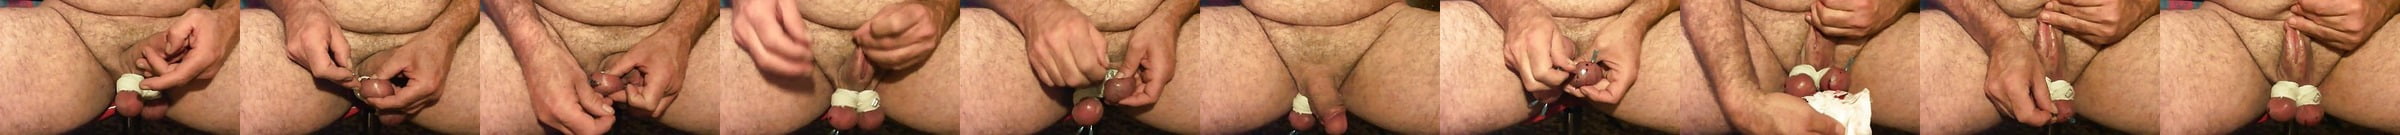 Deep Shaft Piercing Free Gay Hd Porn Video 4c Xhamster Jp 